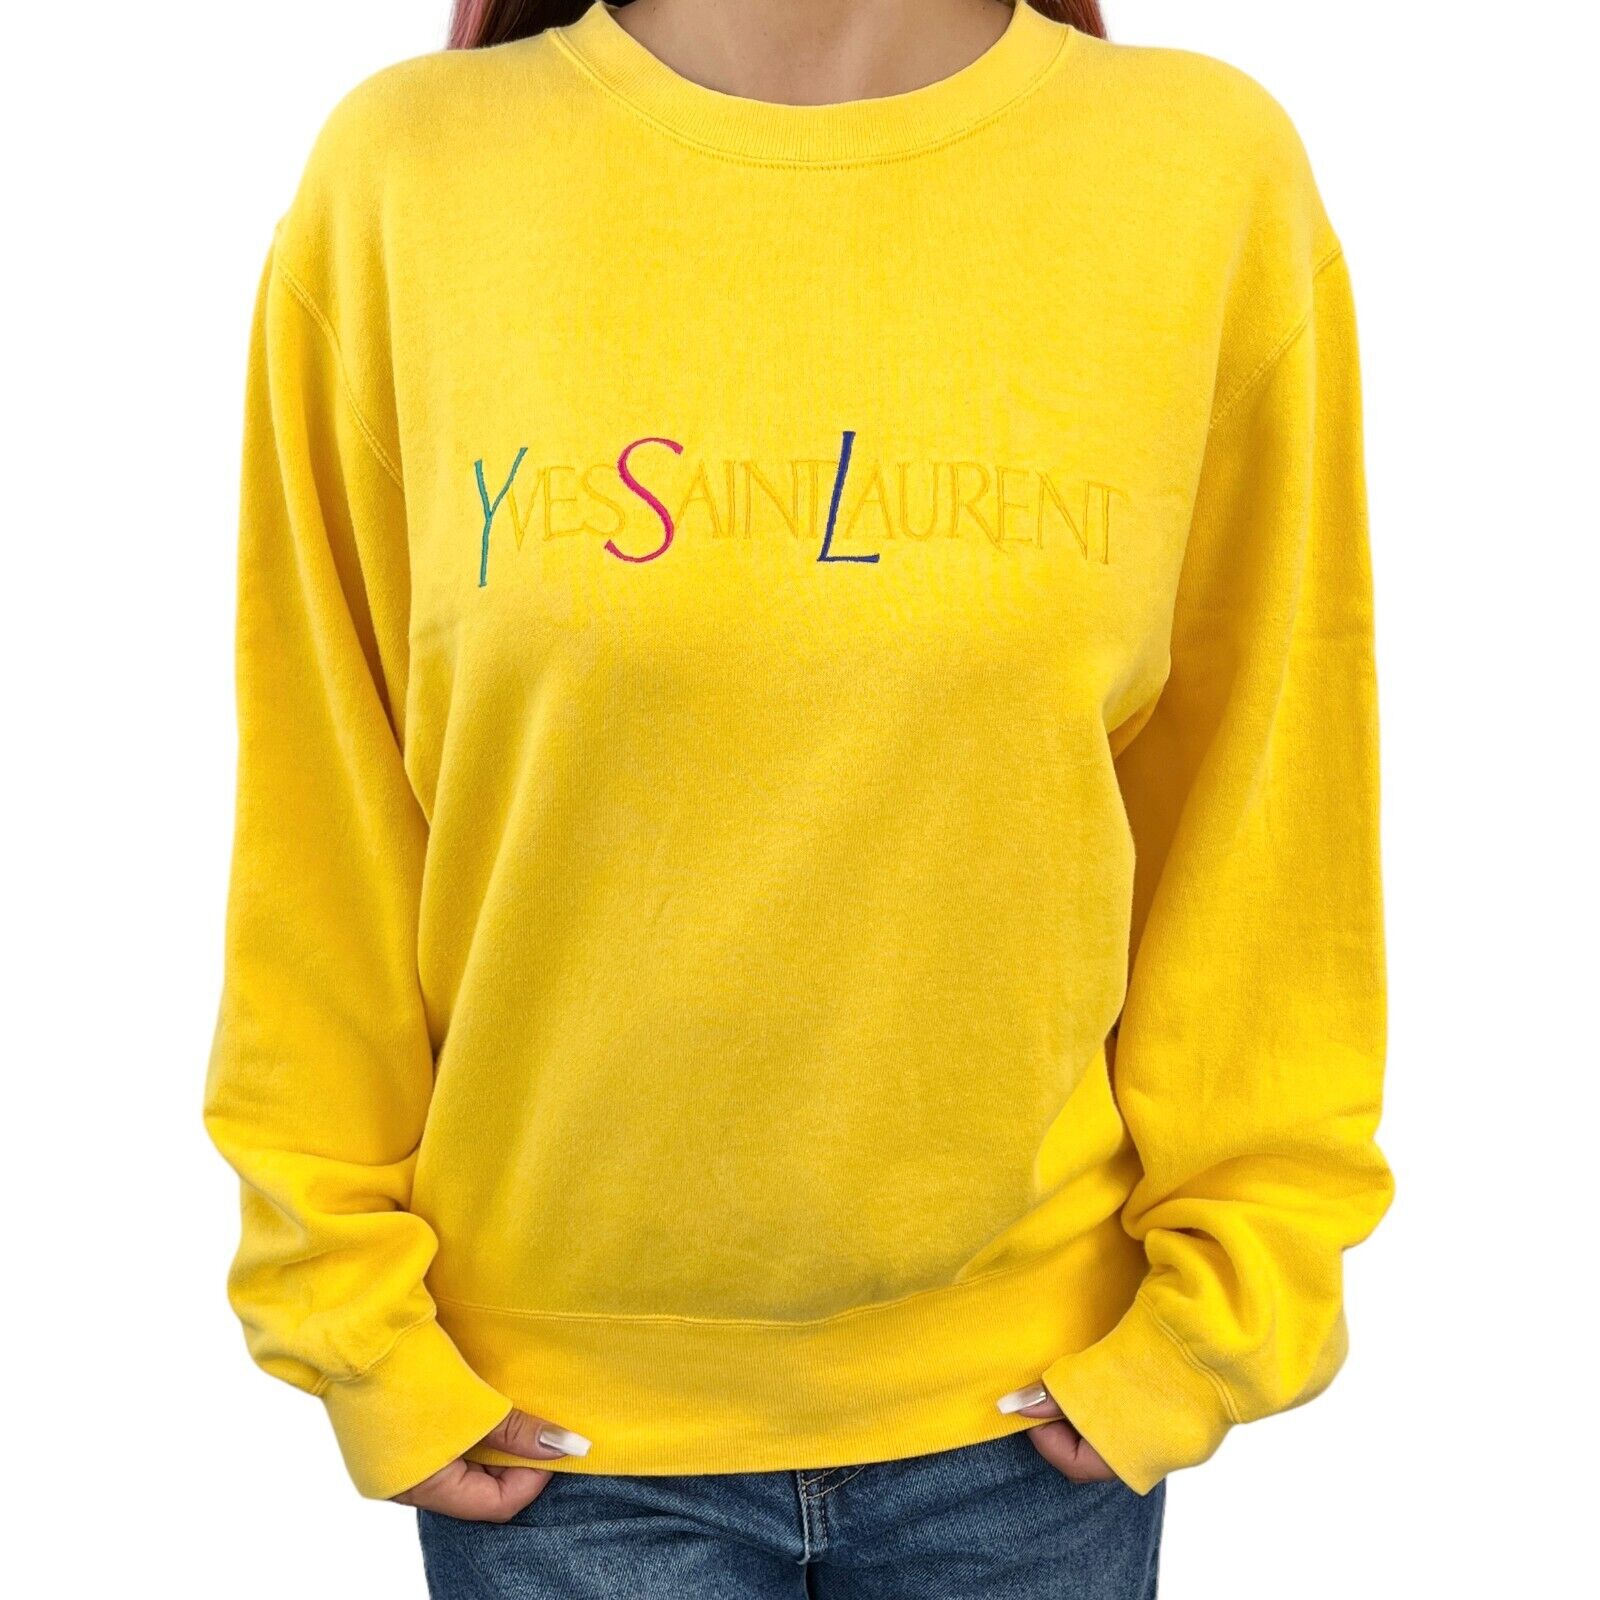 Yves Saint Laurent Vintage Big YSL Initial Logo Sweatshirt Top #M Yellow RankAB